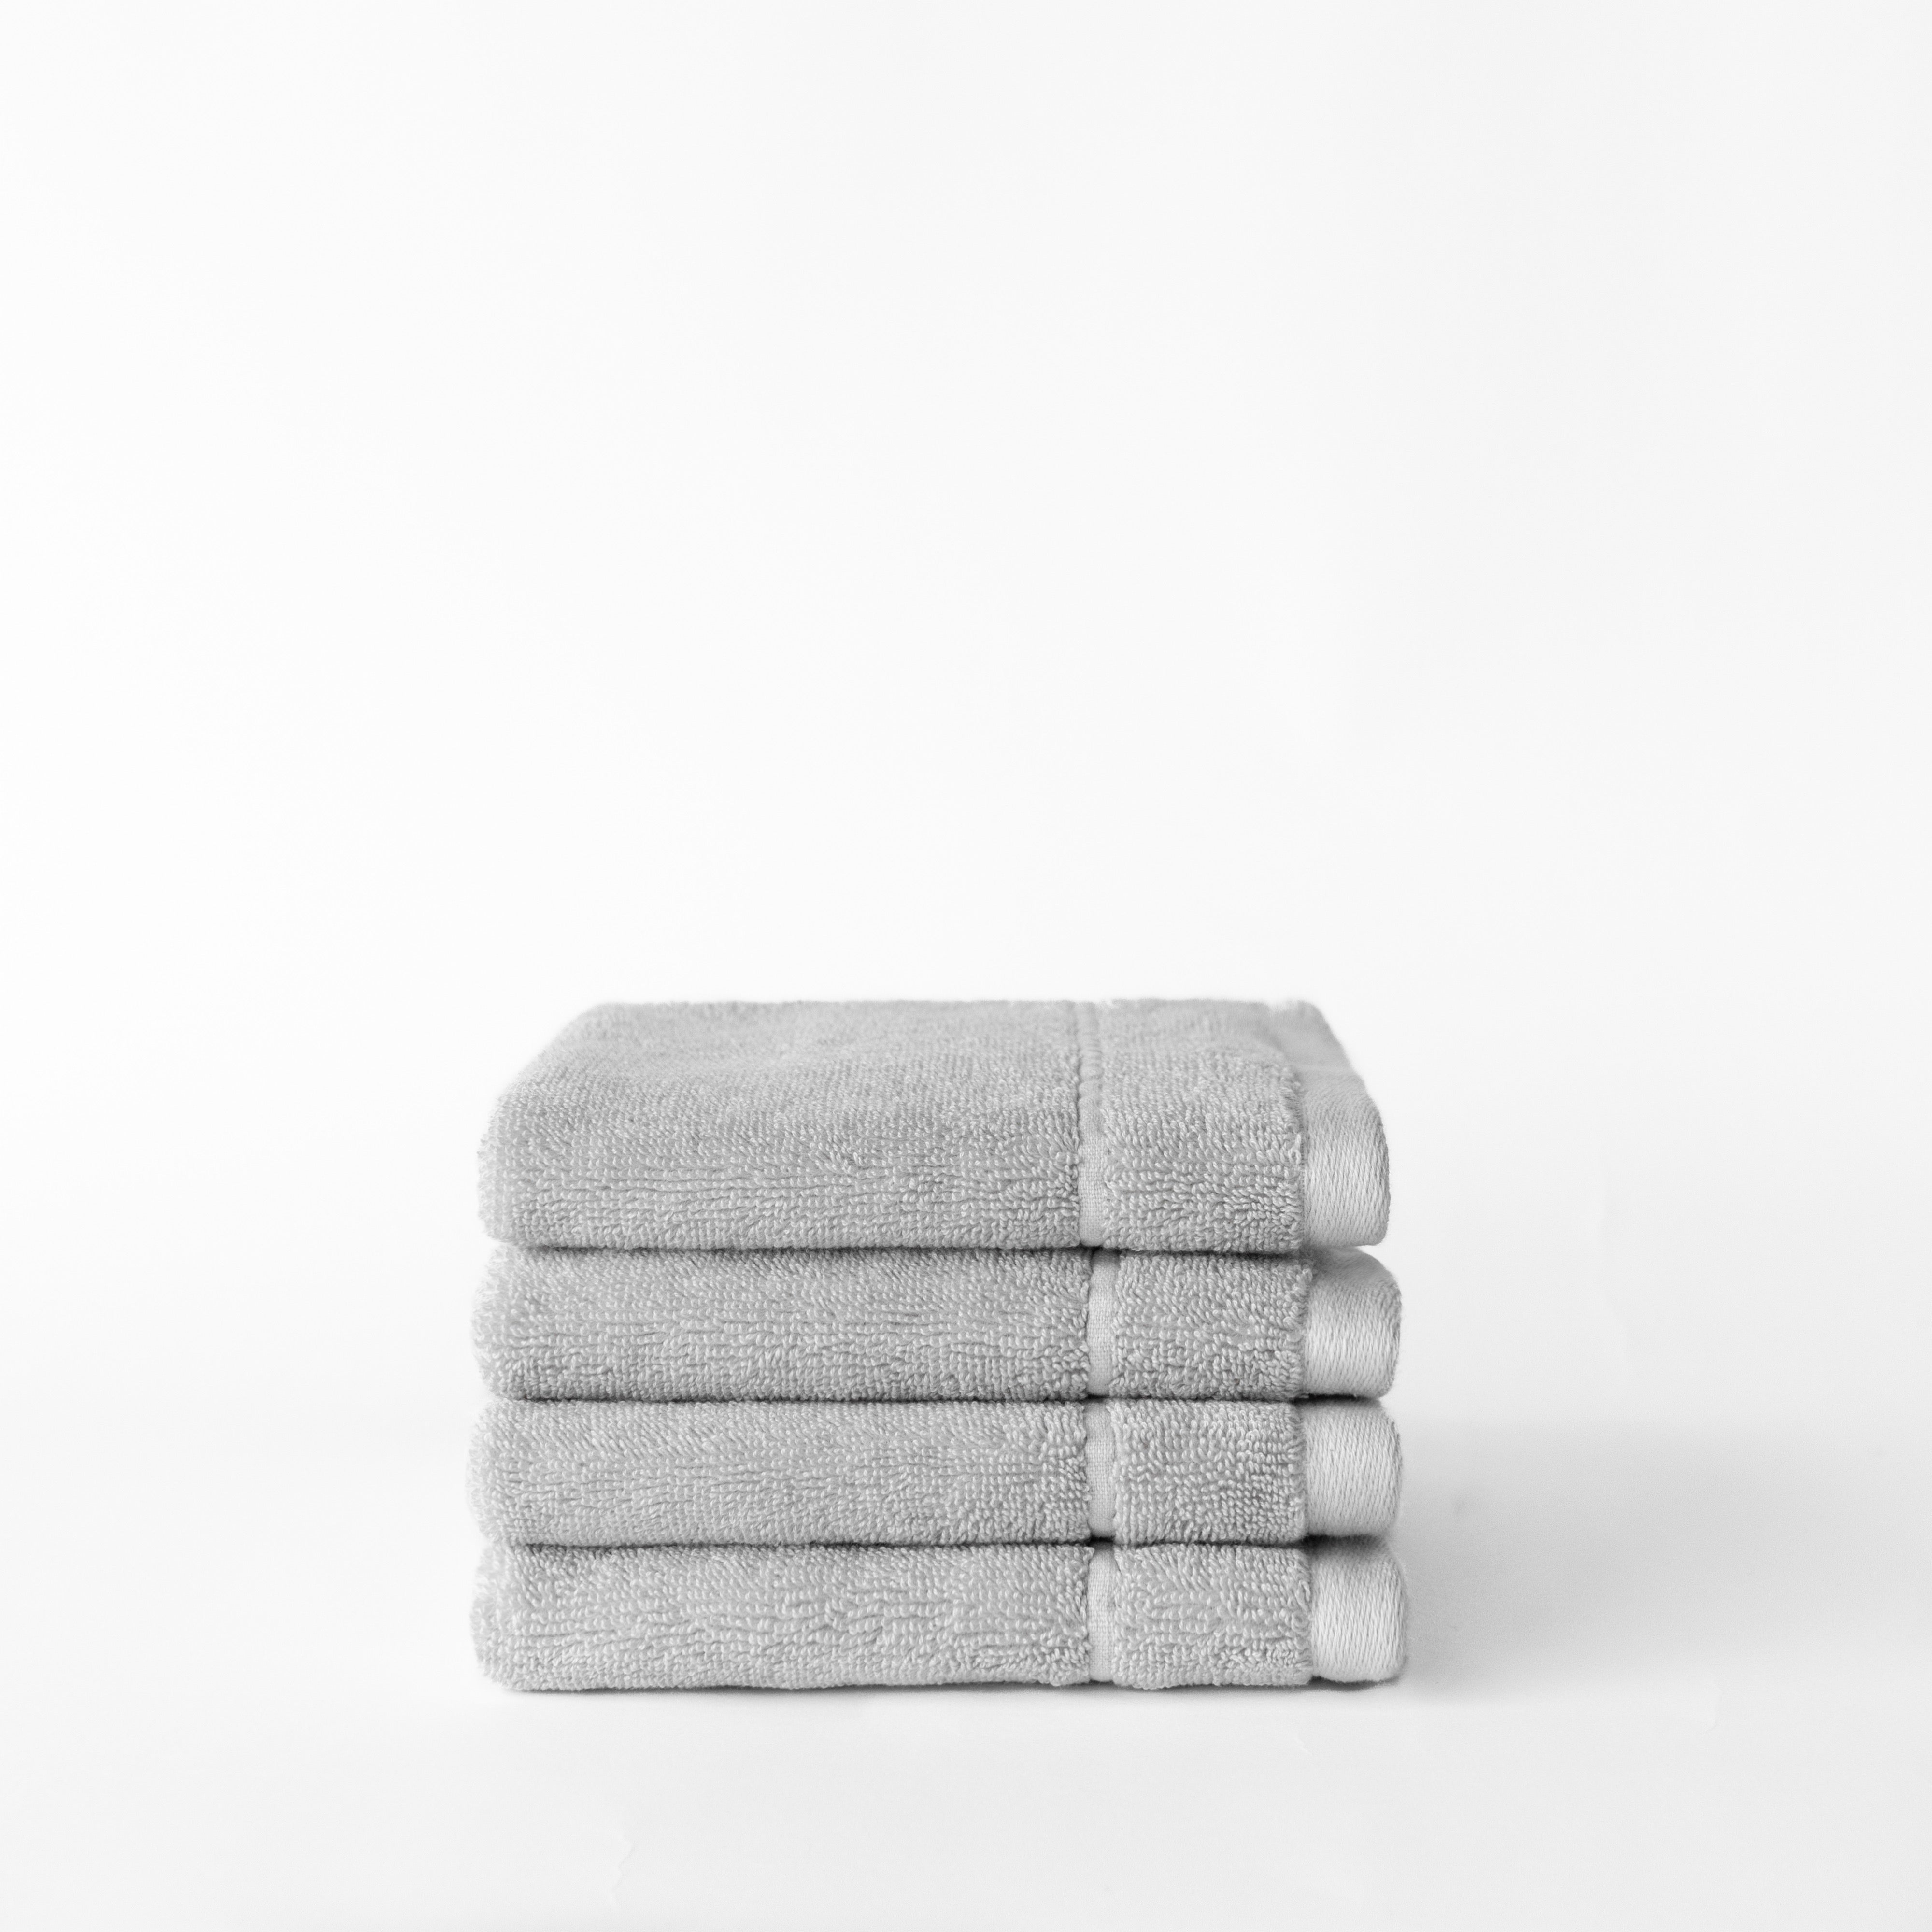 Light Grey Premium Plush Wash Cloths. Photo of Premium Plush Wash Cloths taken with white background |Color: Light Grey 